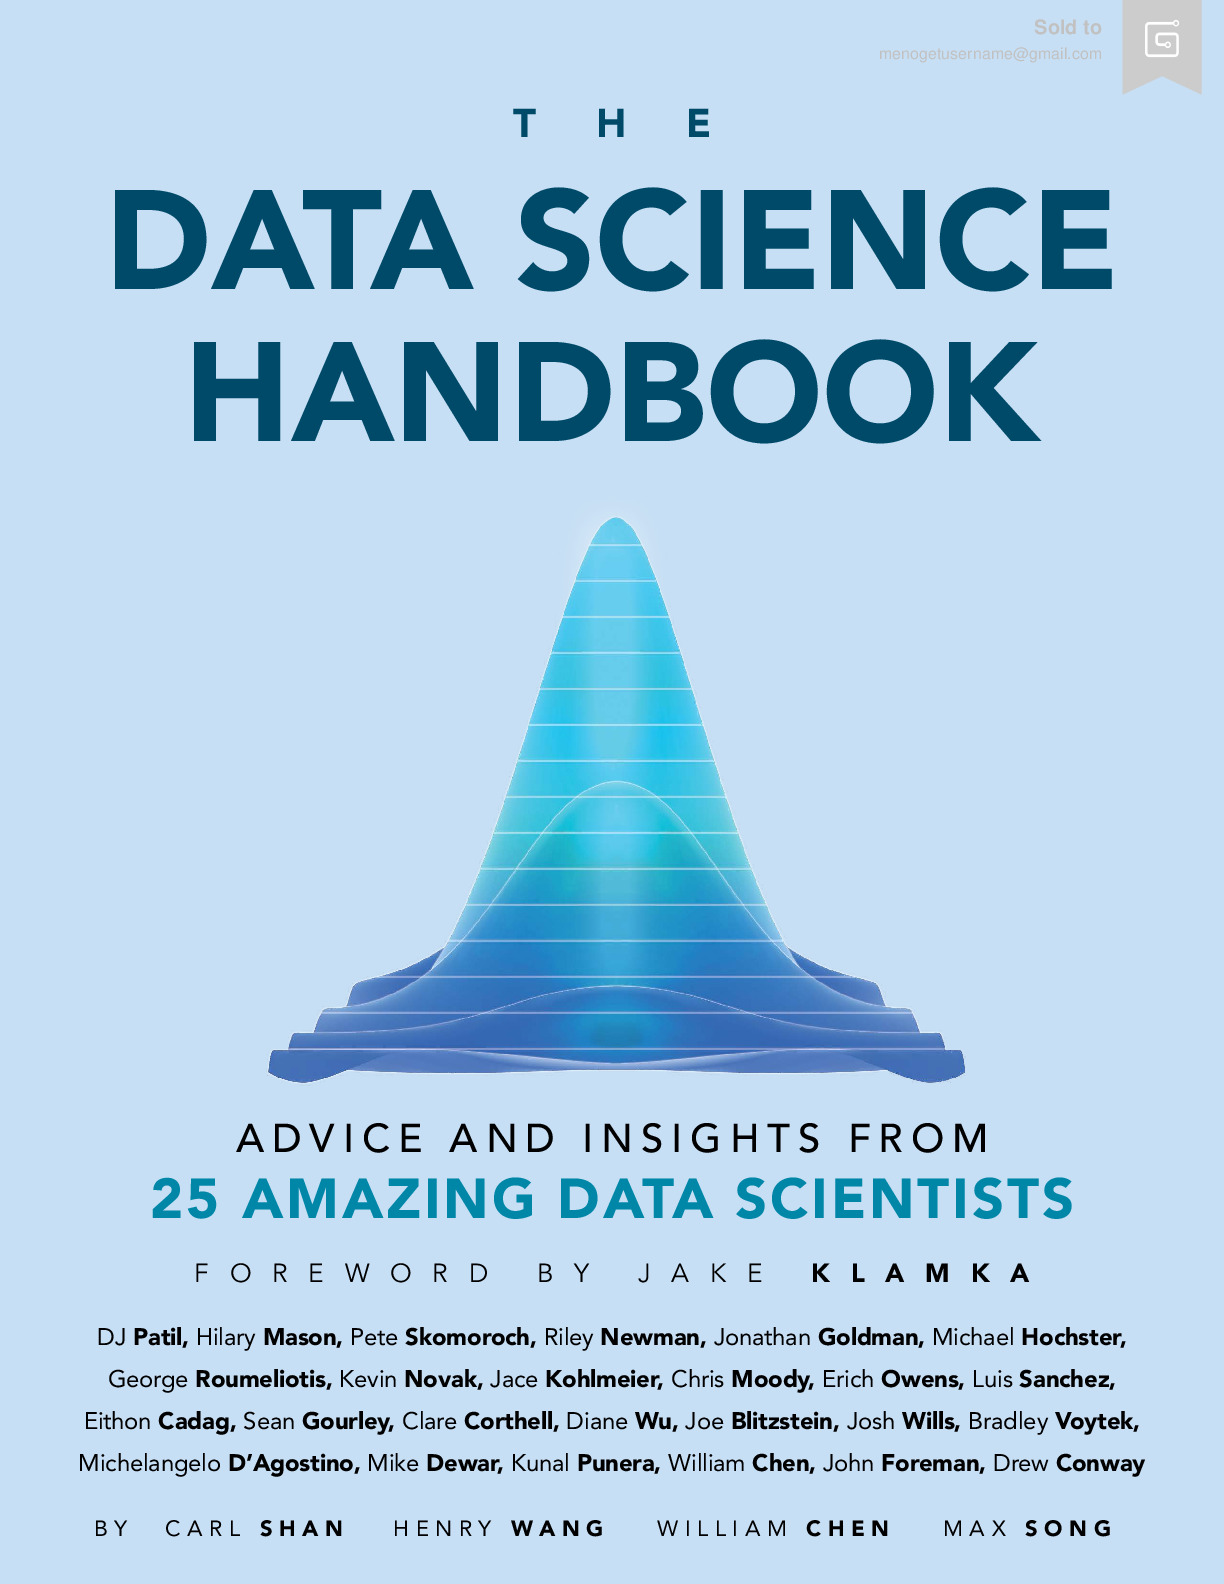 The Data Science Handbook